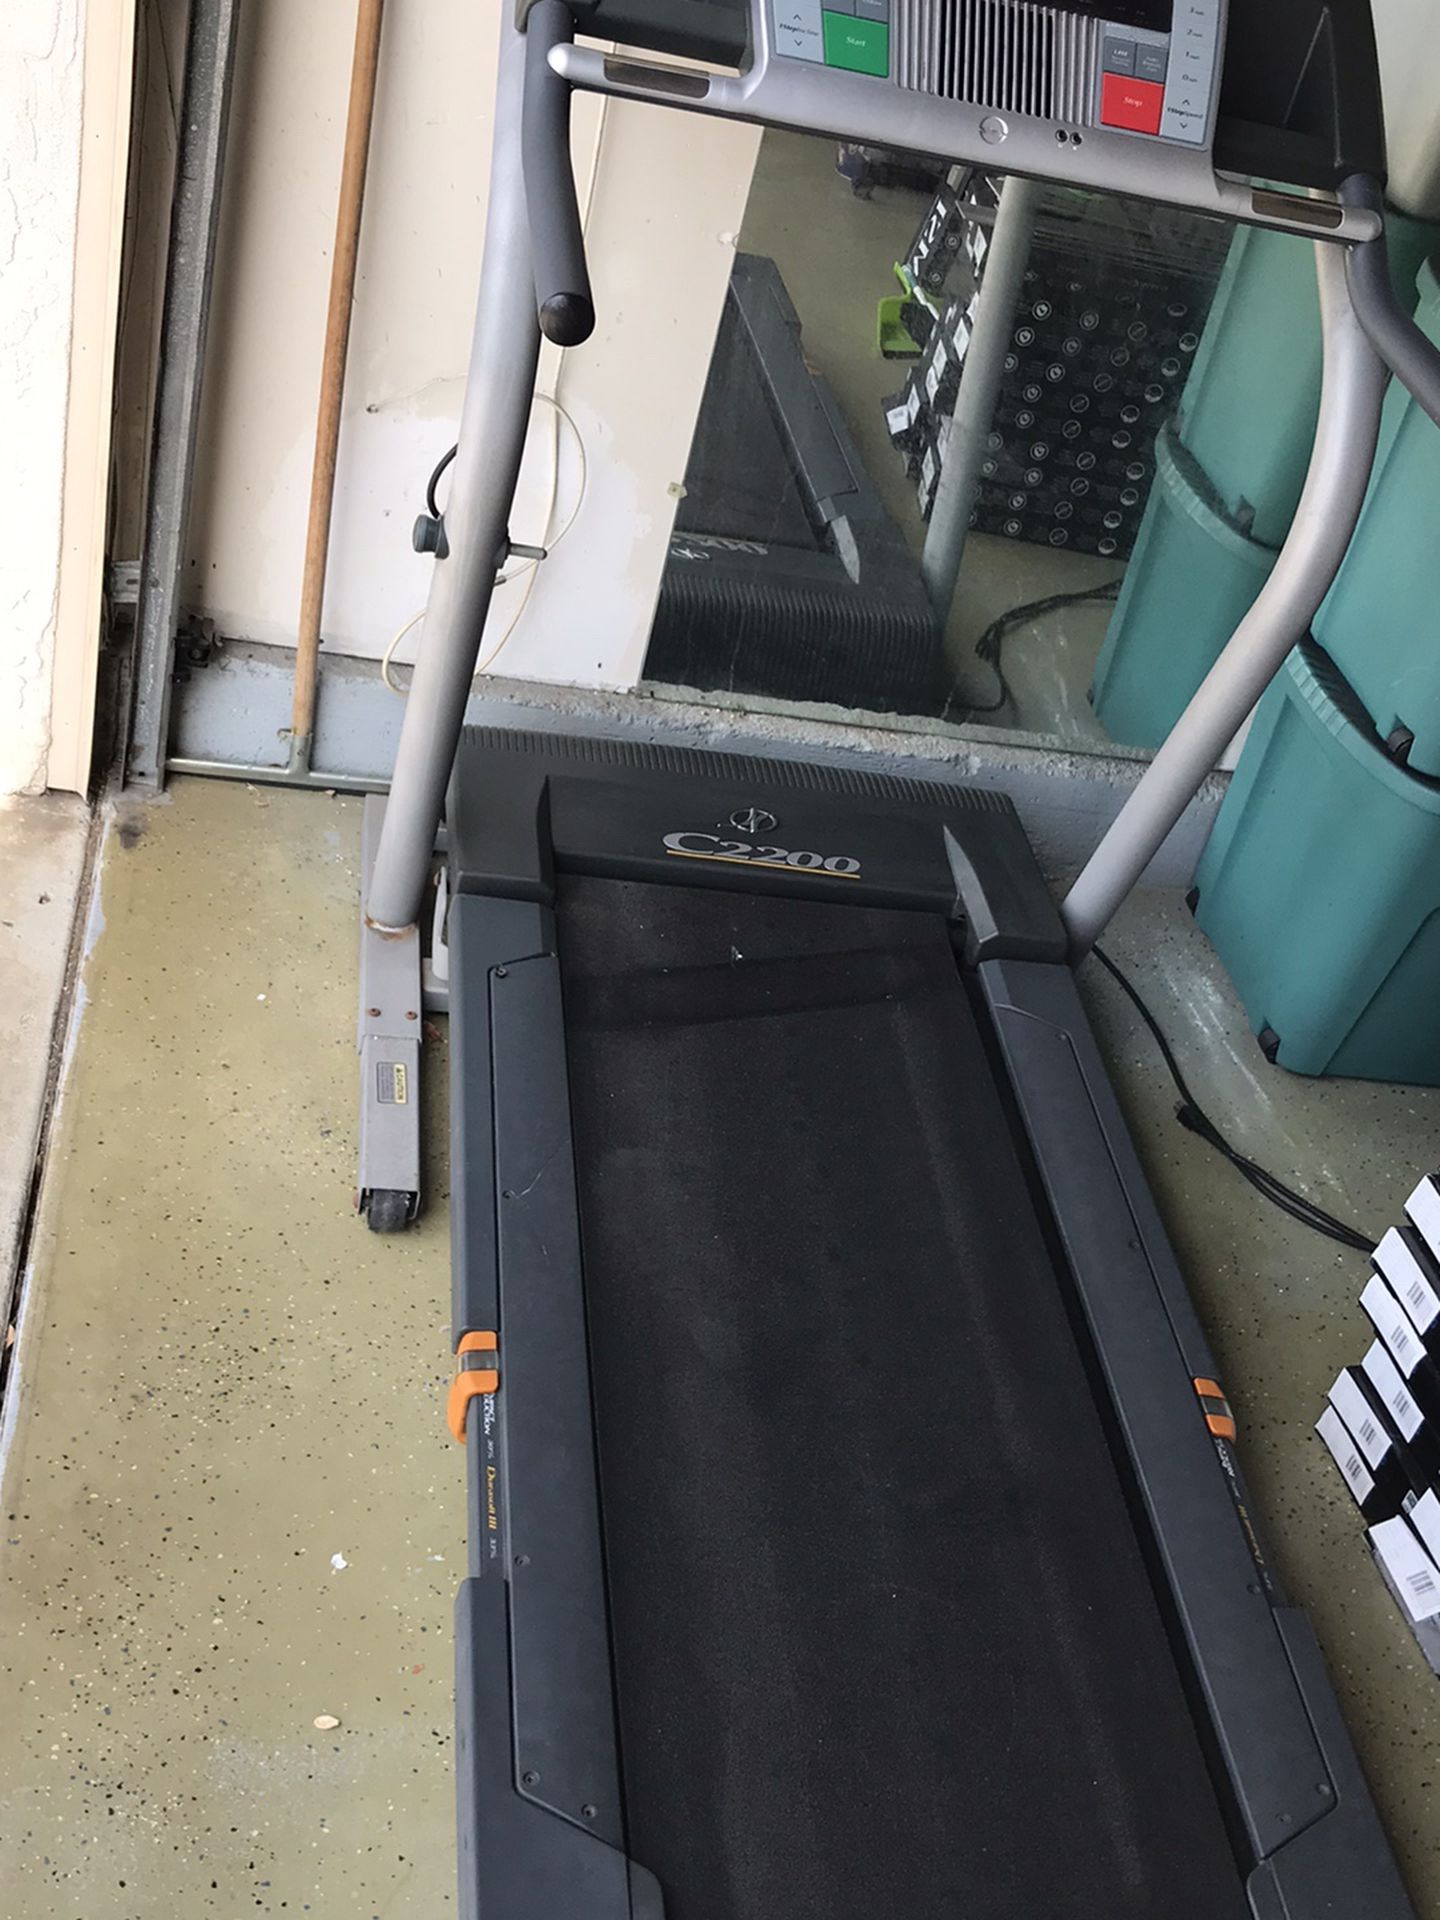 NordicTrack C2200 Treadmill